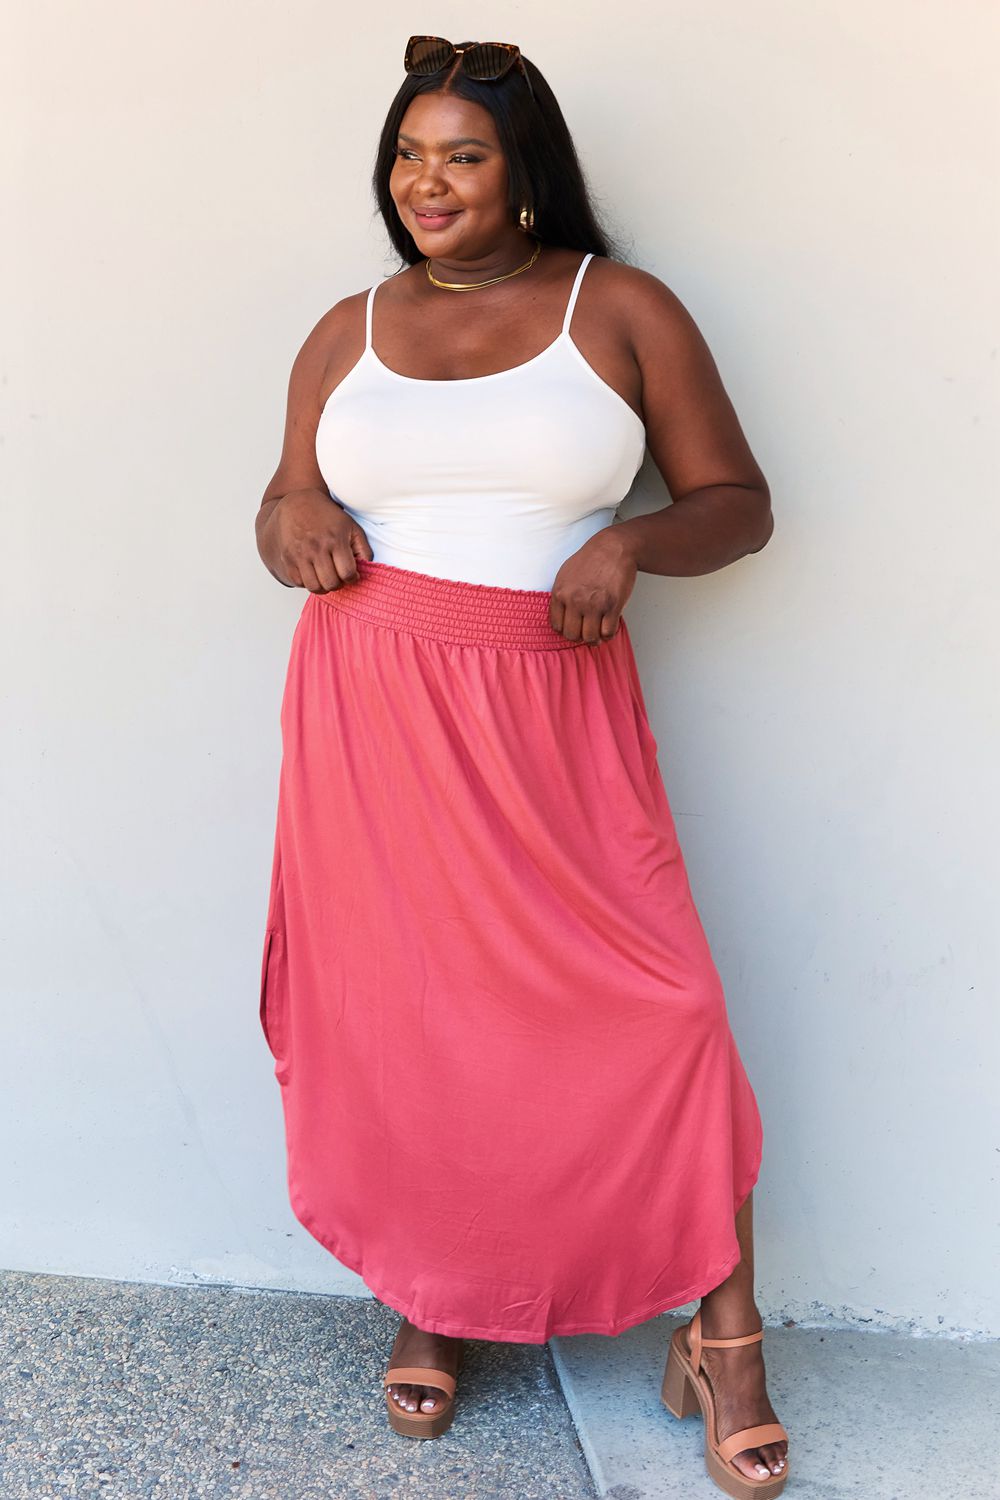 Doublju Comfort Princess Full Size High Waist Scoop Hem Maxi Skirt in Hot Pink  | KIKI COUTURE